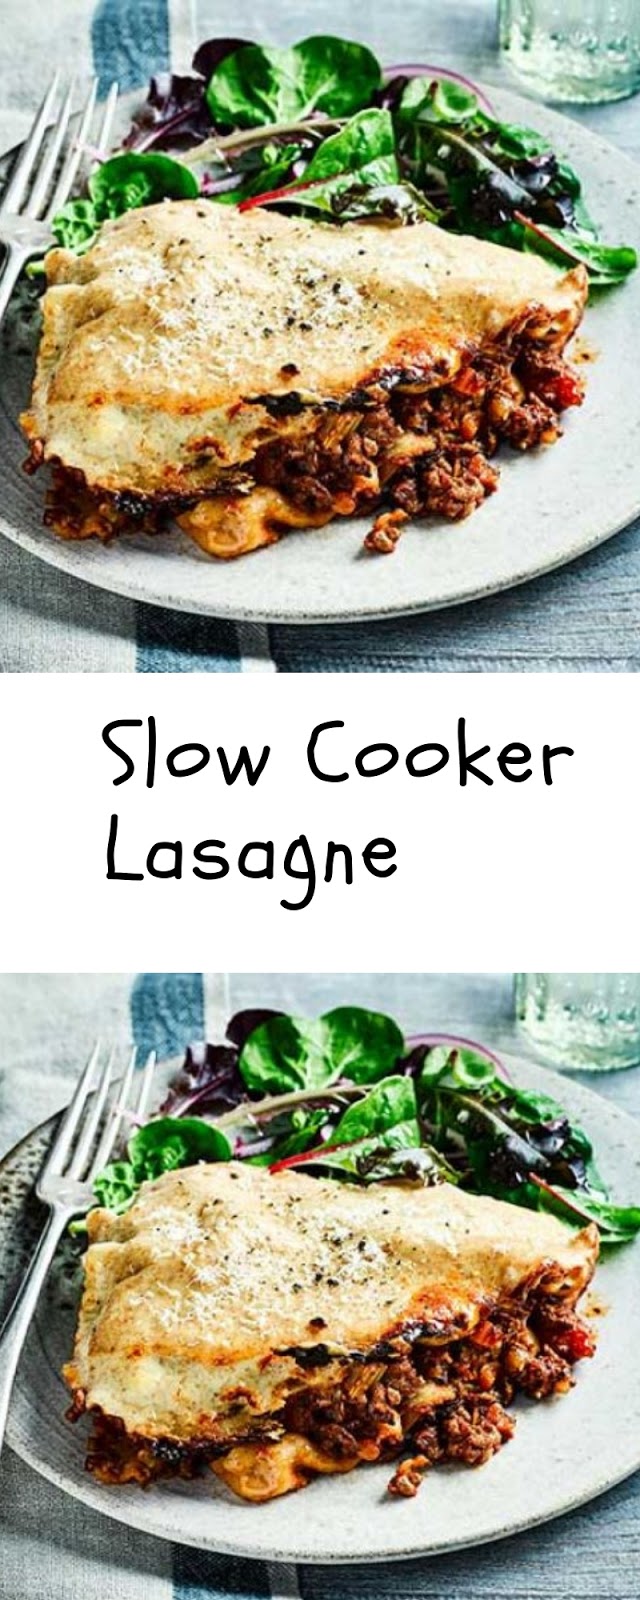 Slow Cooker Lasagne | Home Delicious Recipe